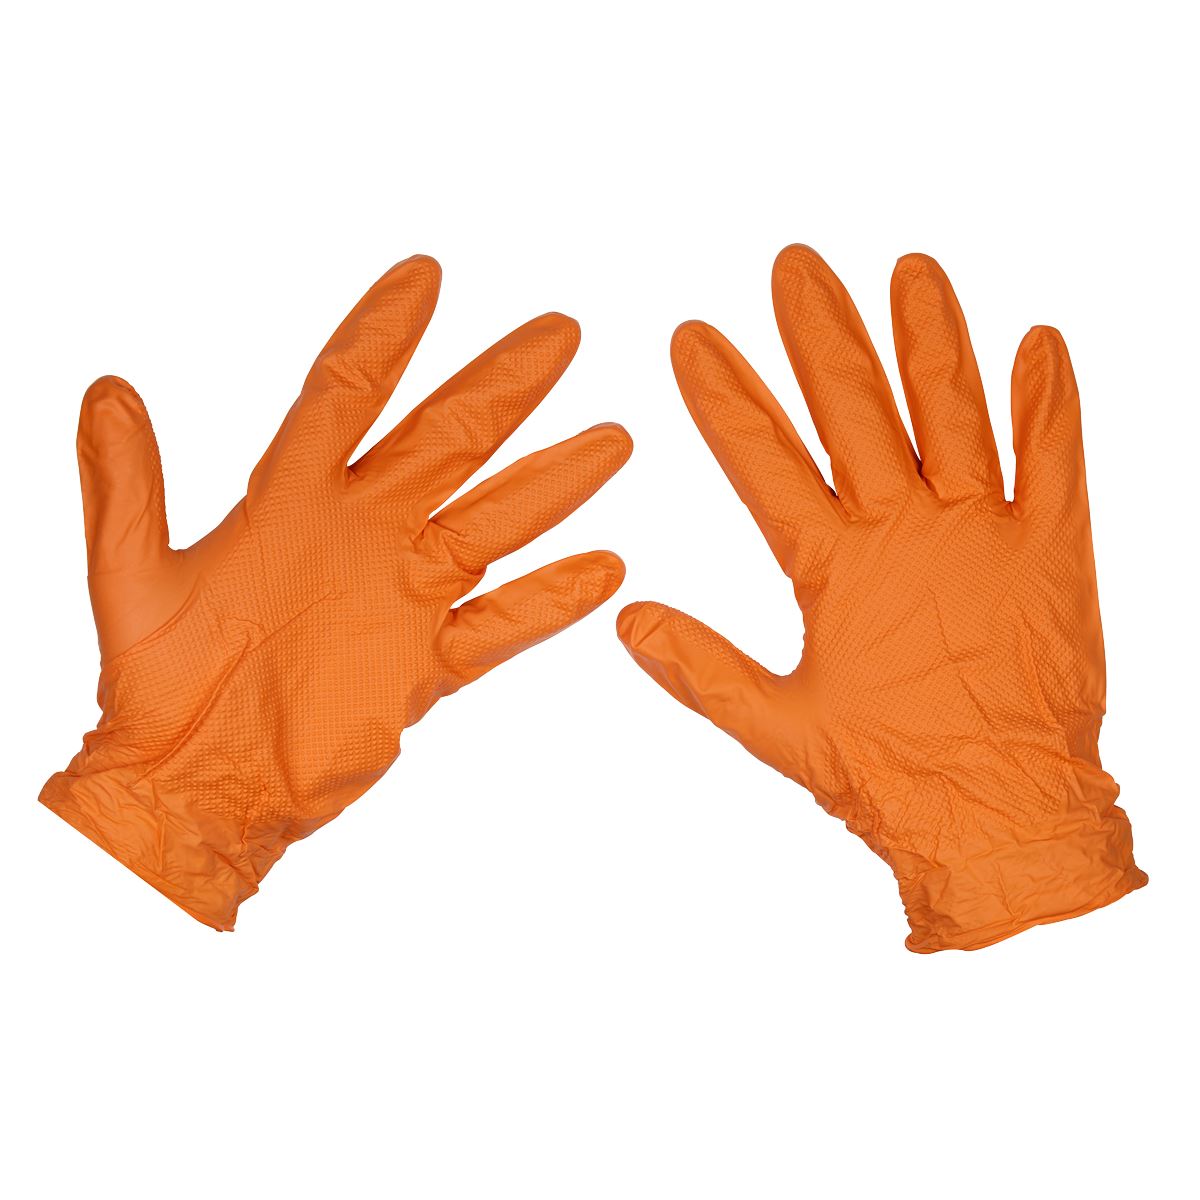 Sealey Orange Diamond Grip Extra-Thick Nitrile Powder-Free Gloves X-Large - Pack of 50